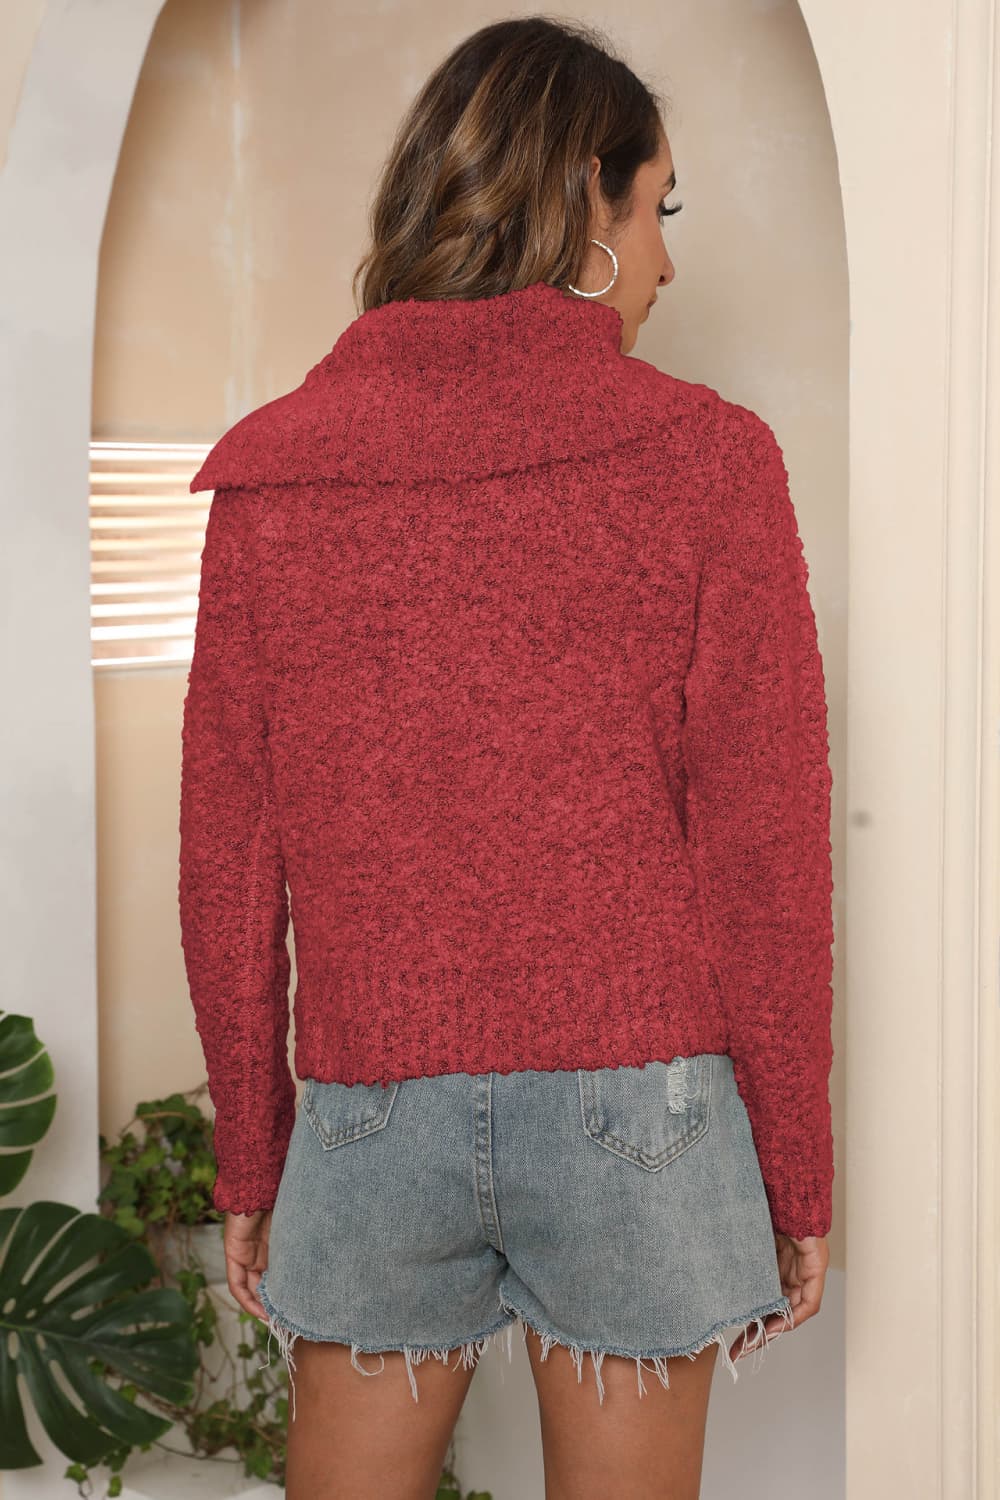 Asymmetrical Neck Long Sleeve Pullover Sweater